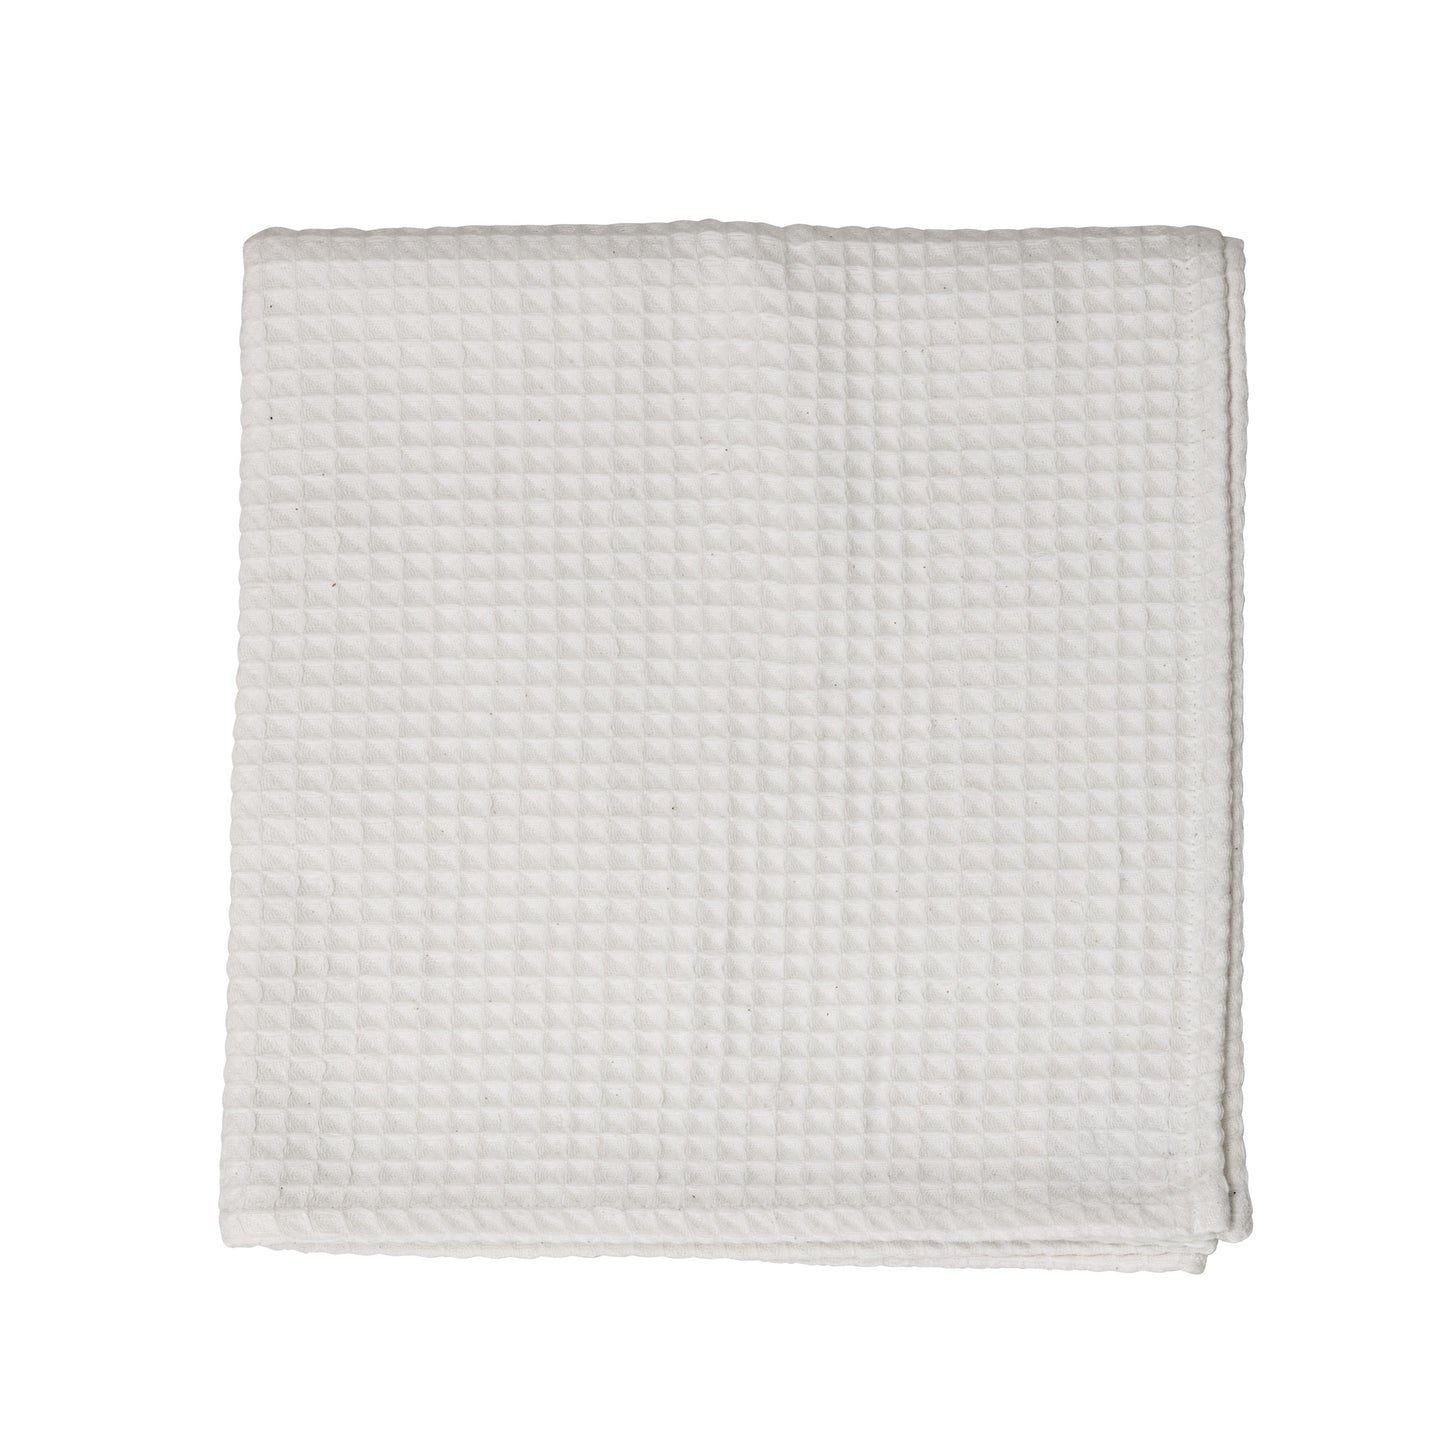 Bloomingville håndklæde hvid 140x70cm